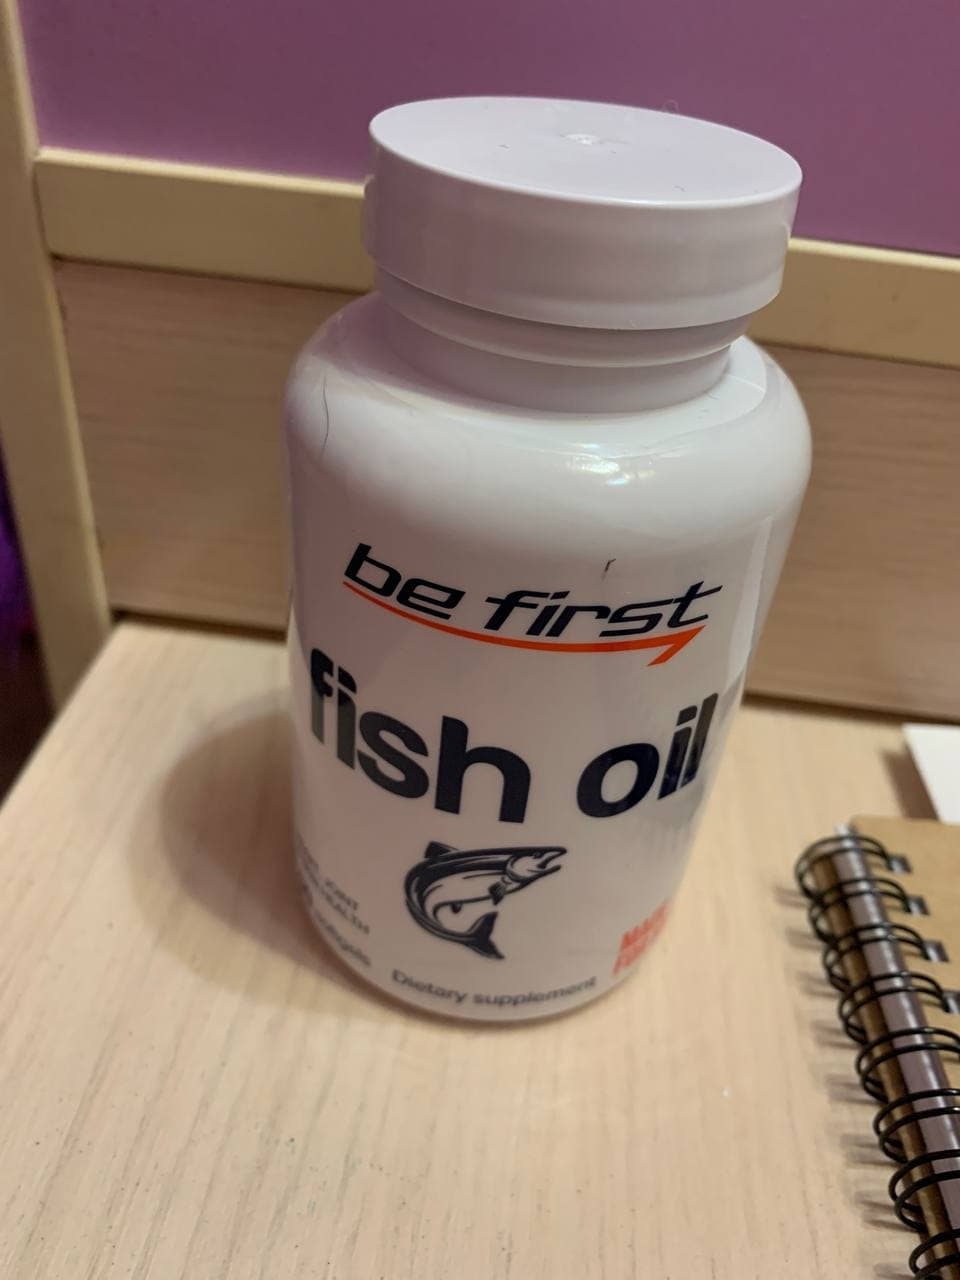 Be First Рыбный жир Fish Oil - Отличный